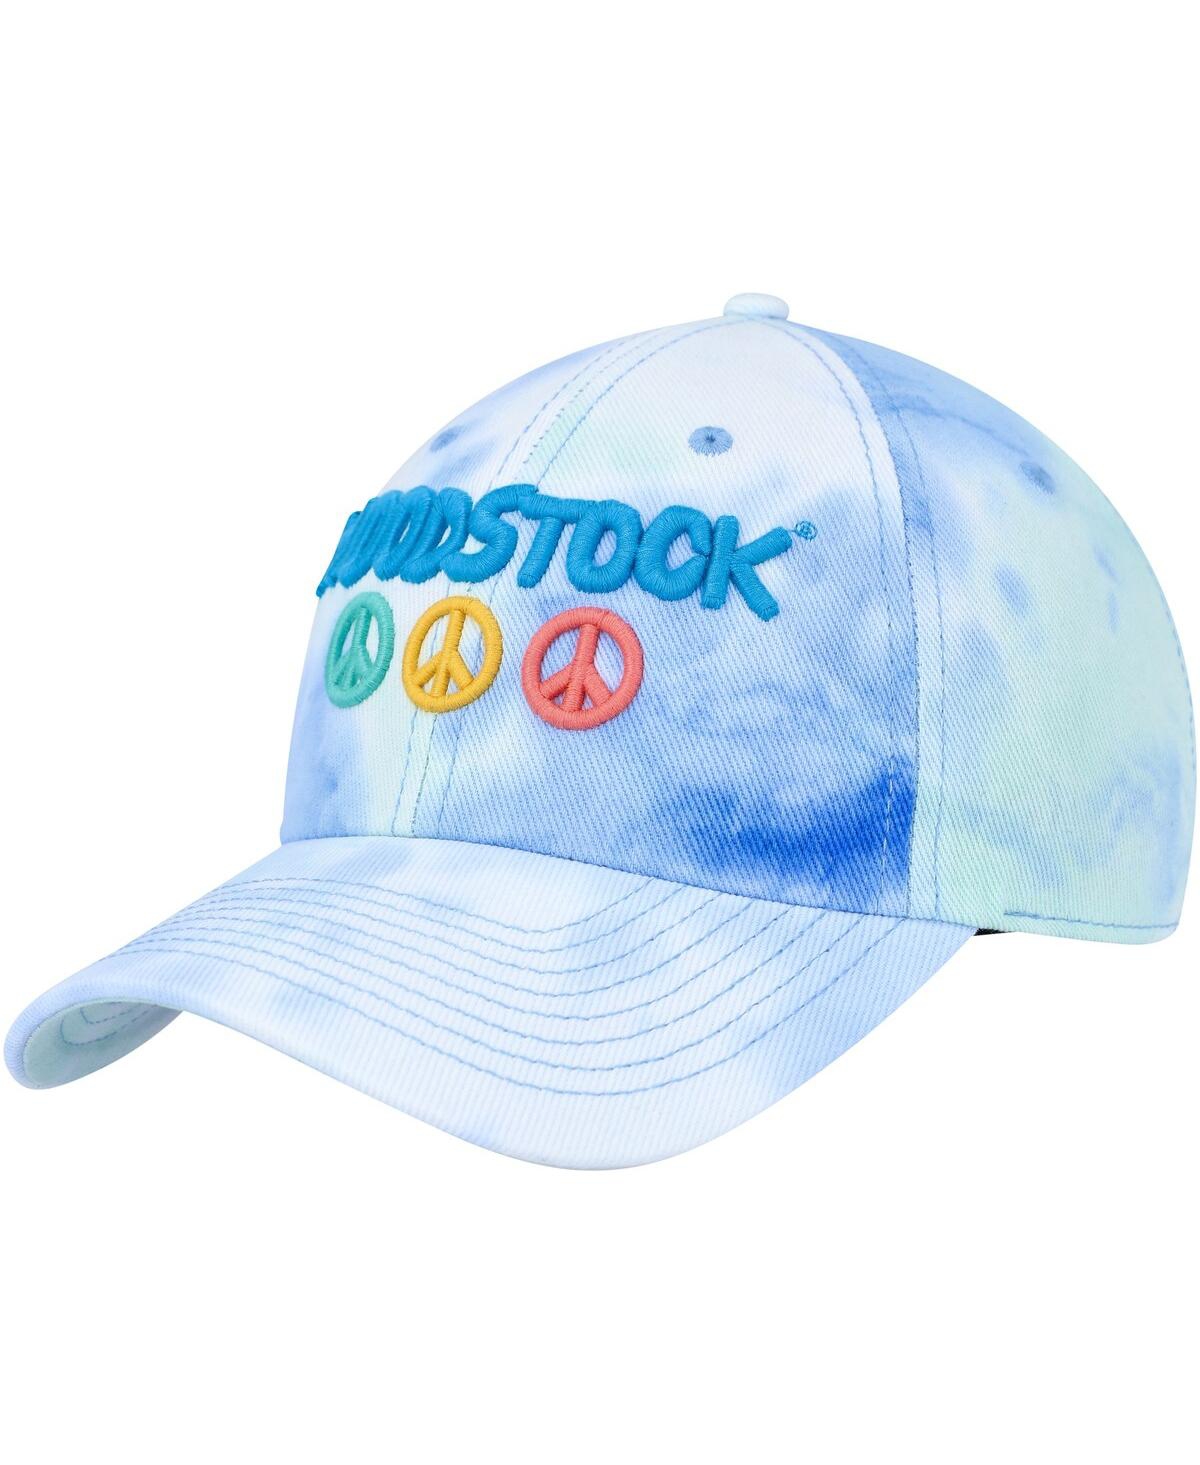 American Needle Men's And Women's  Blue Woodstock Ballpark Adjustable Hat